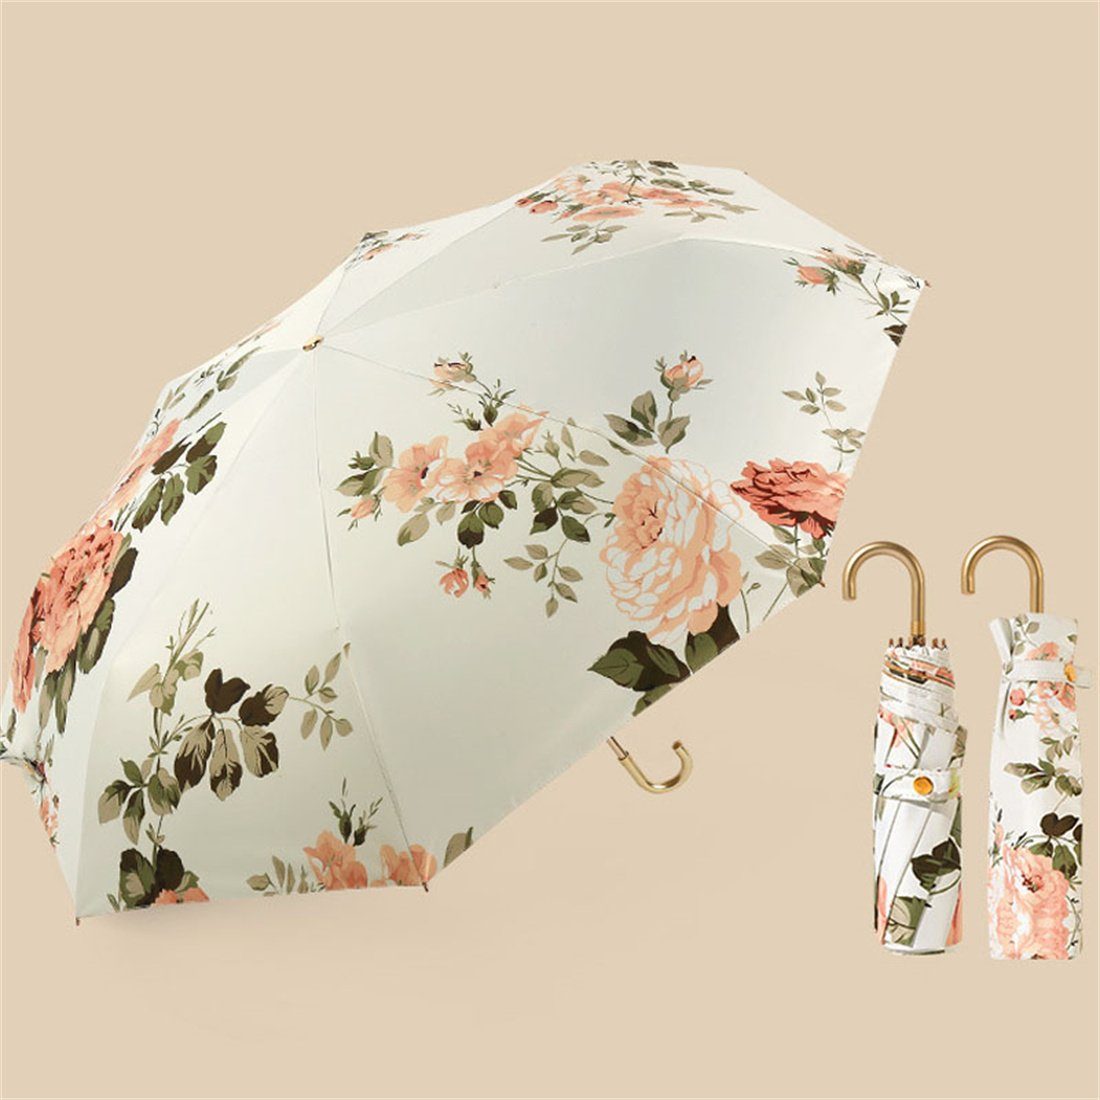 DÖRÖY Taschenregenschirm UV-Faltschirm,Tragbarer Regenschirm,Goldener Haken-Regenschirm